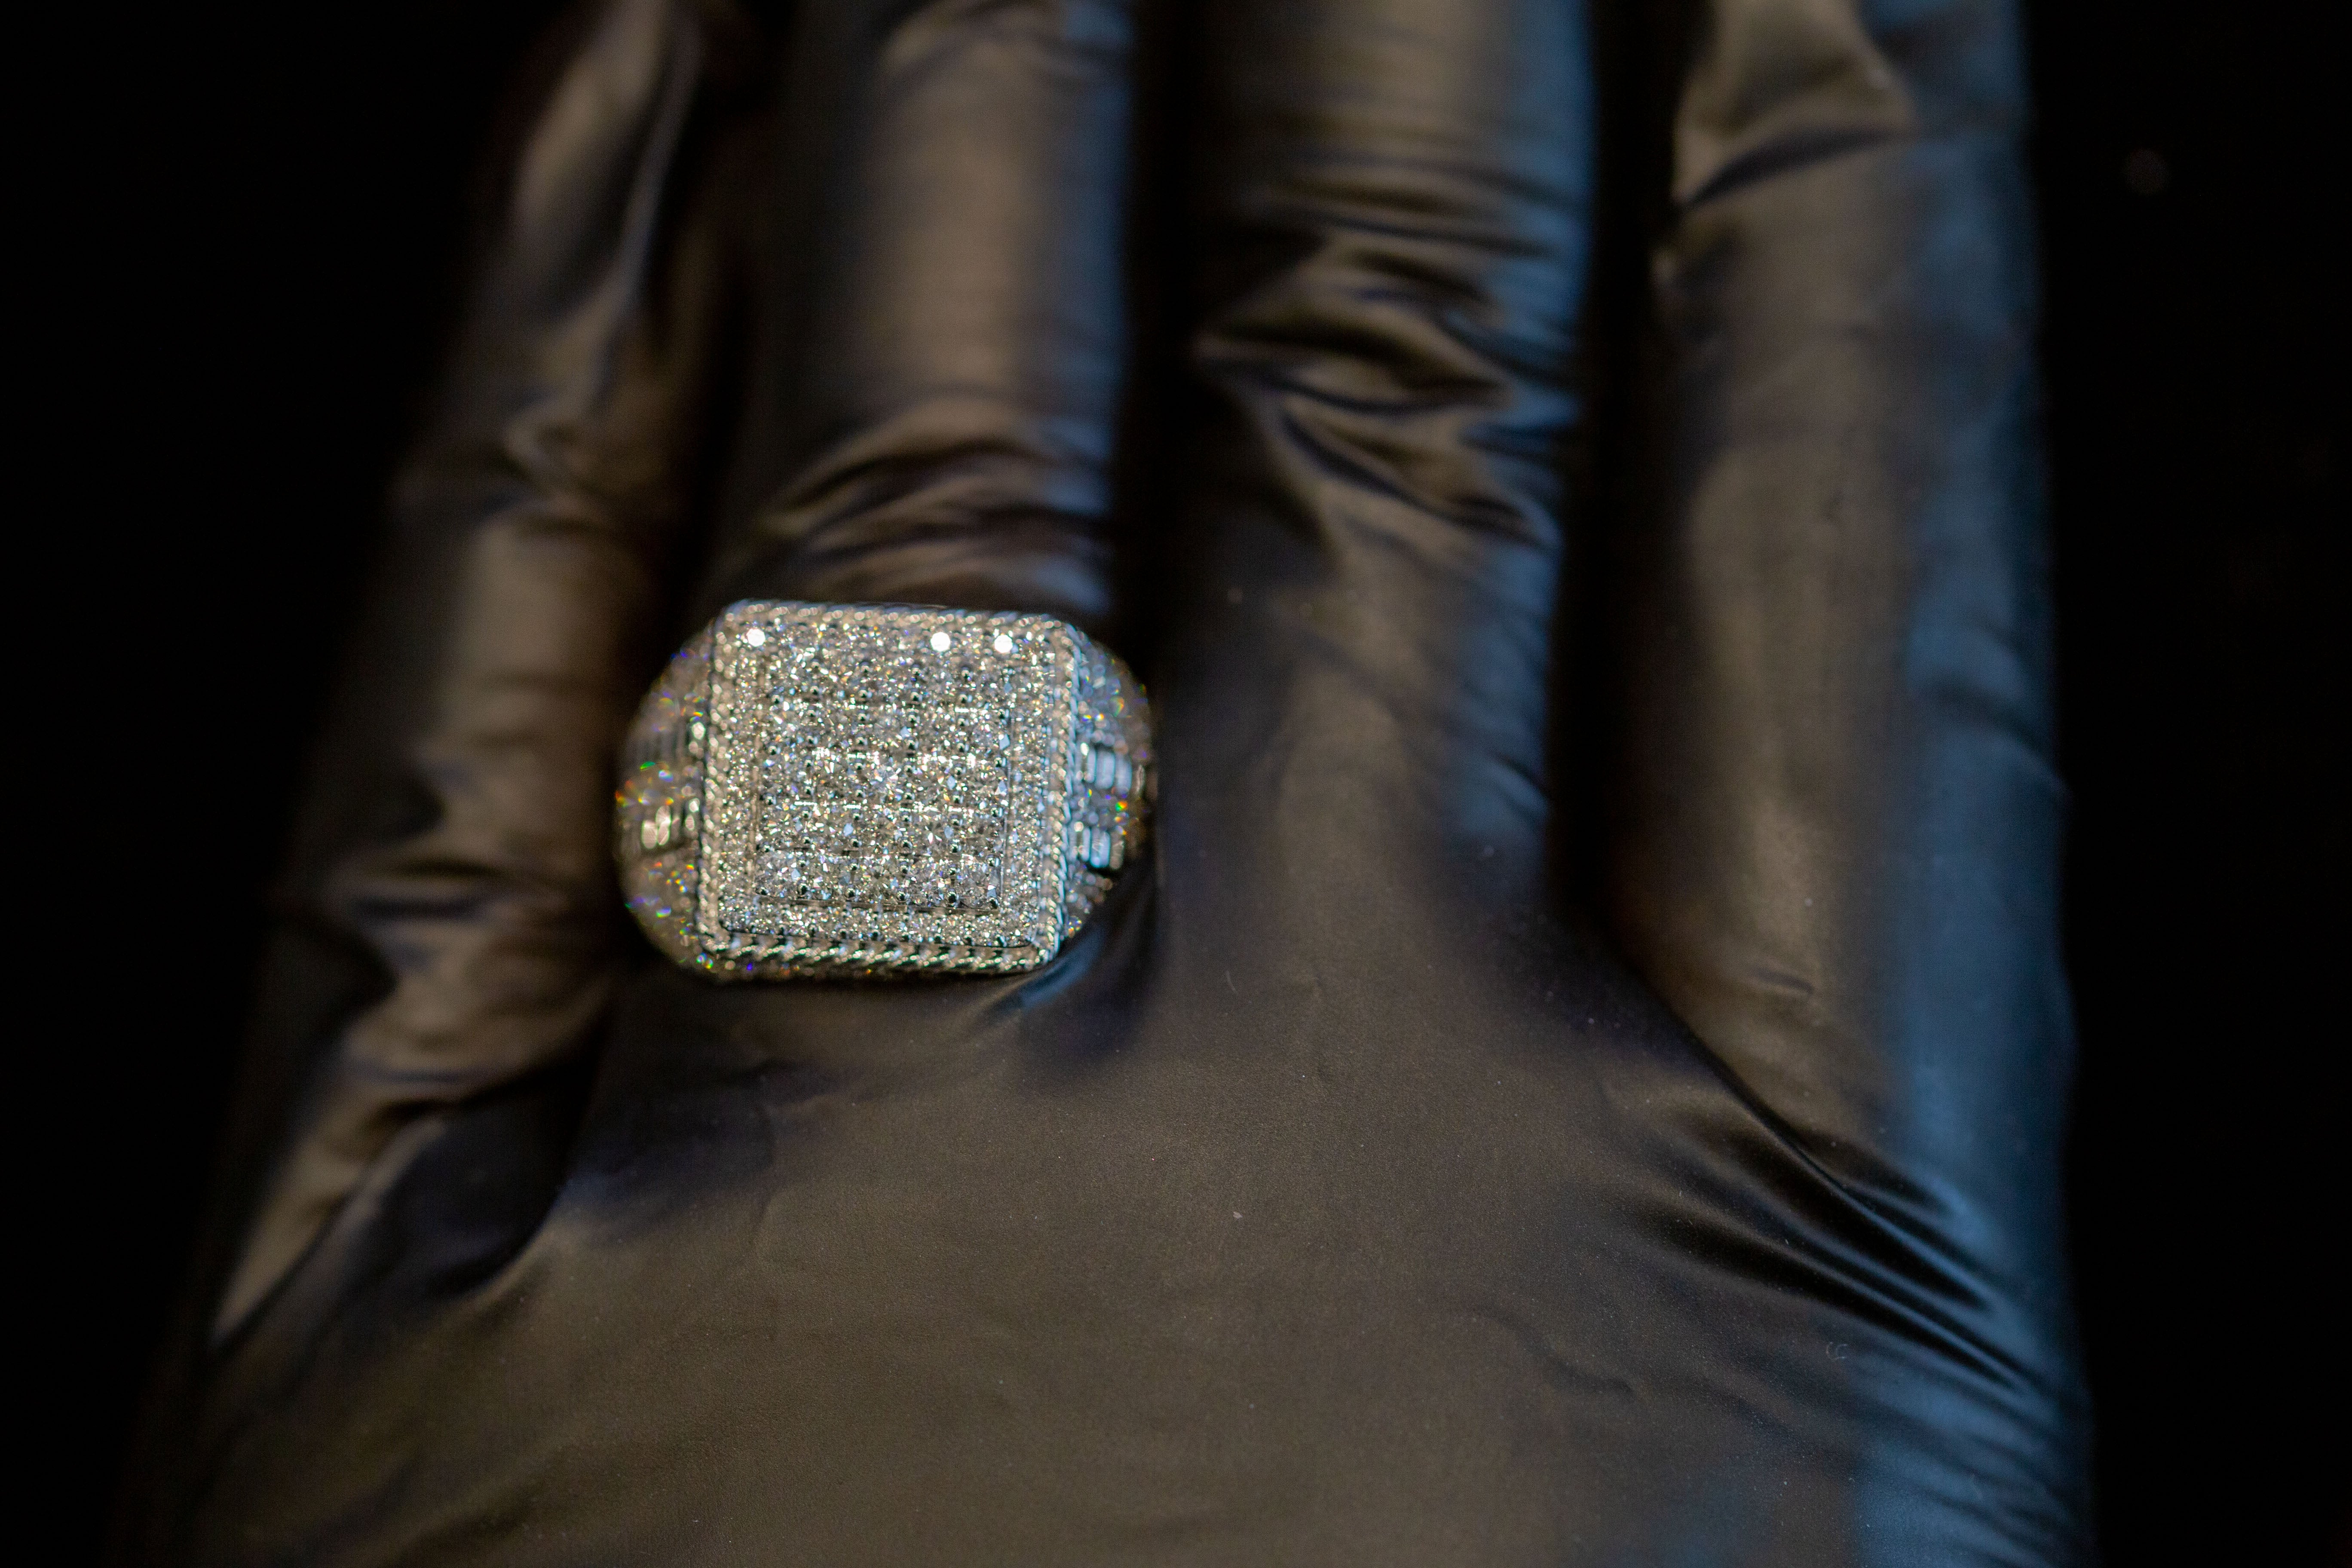 3.50 CT. VVS Diamond 14K Gold Ring - White Carat Diamonds 